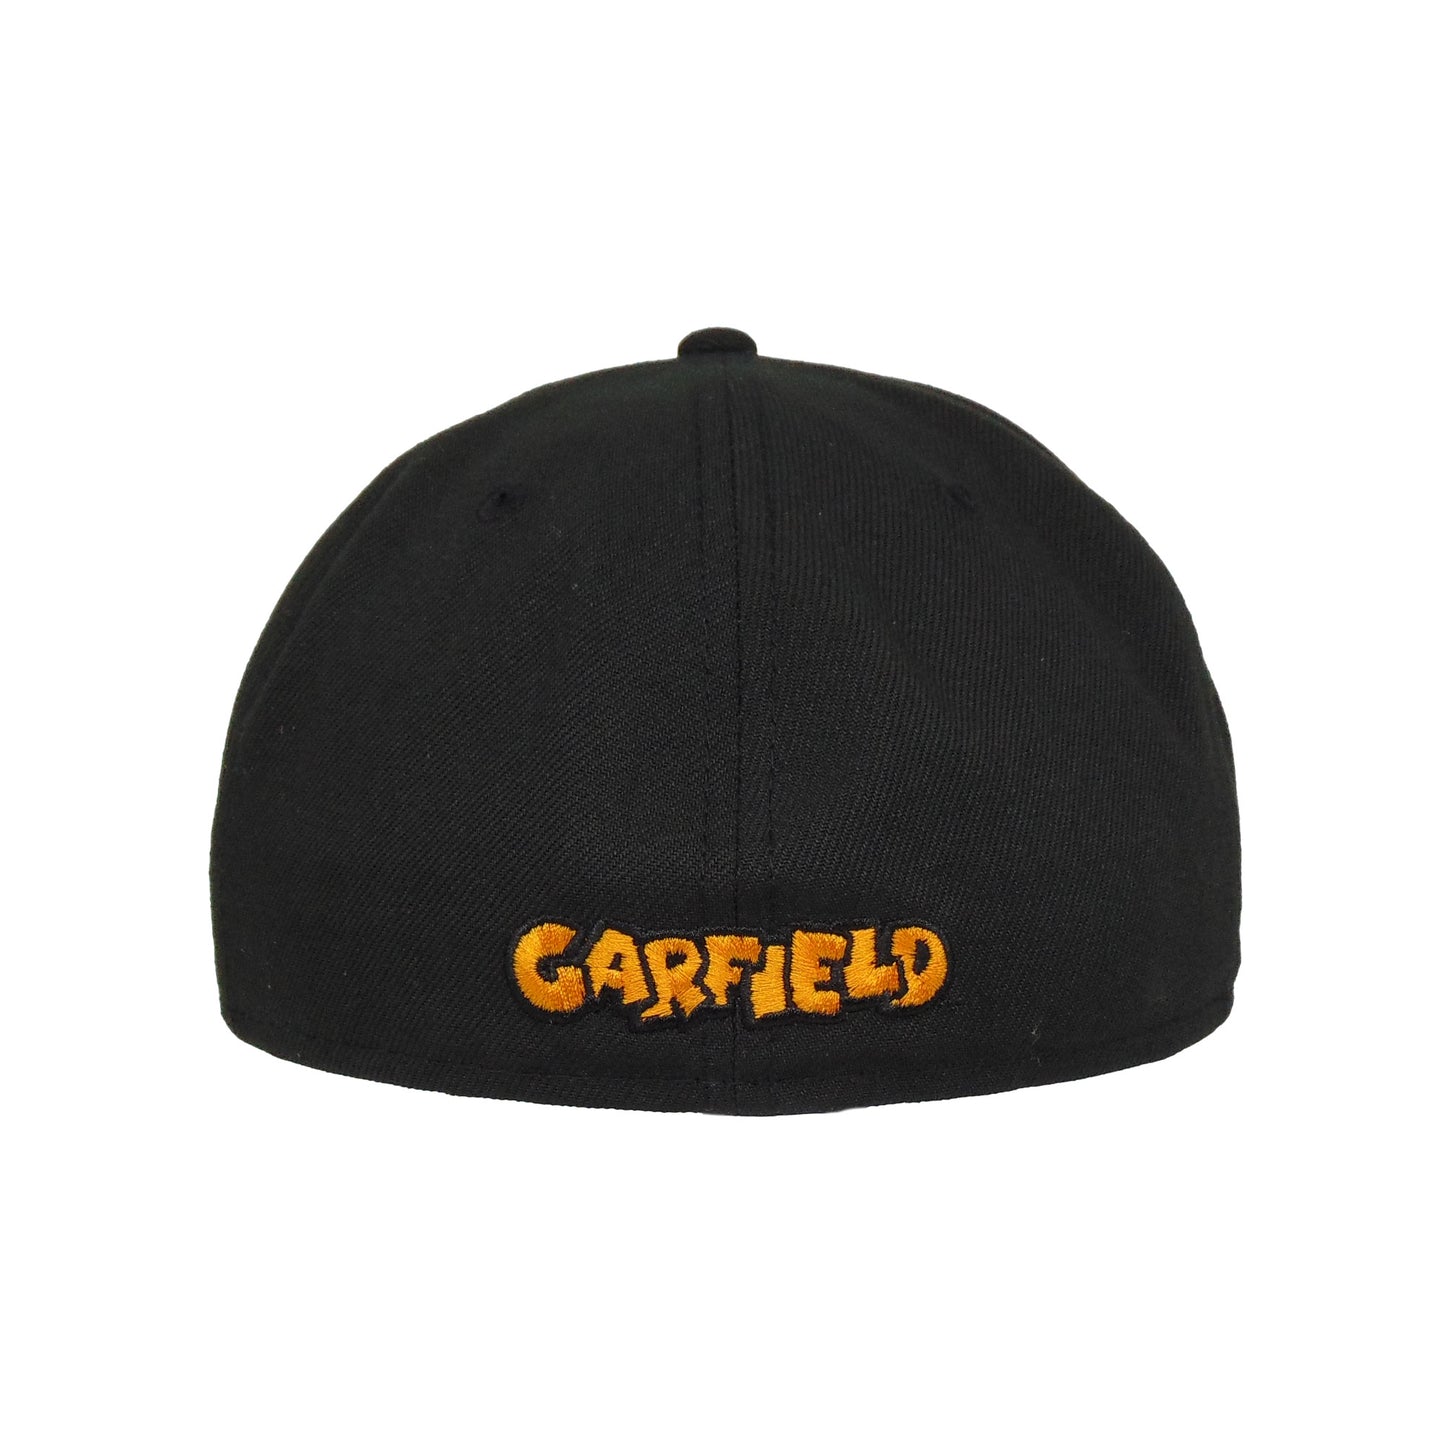 Garfield New Era 59FIFTY Cap black